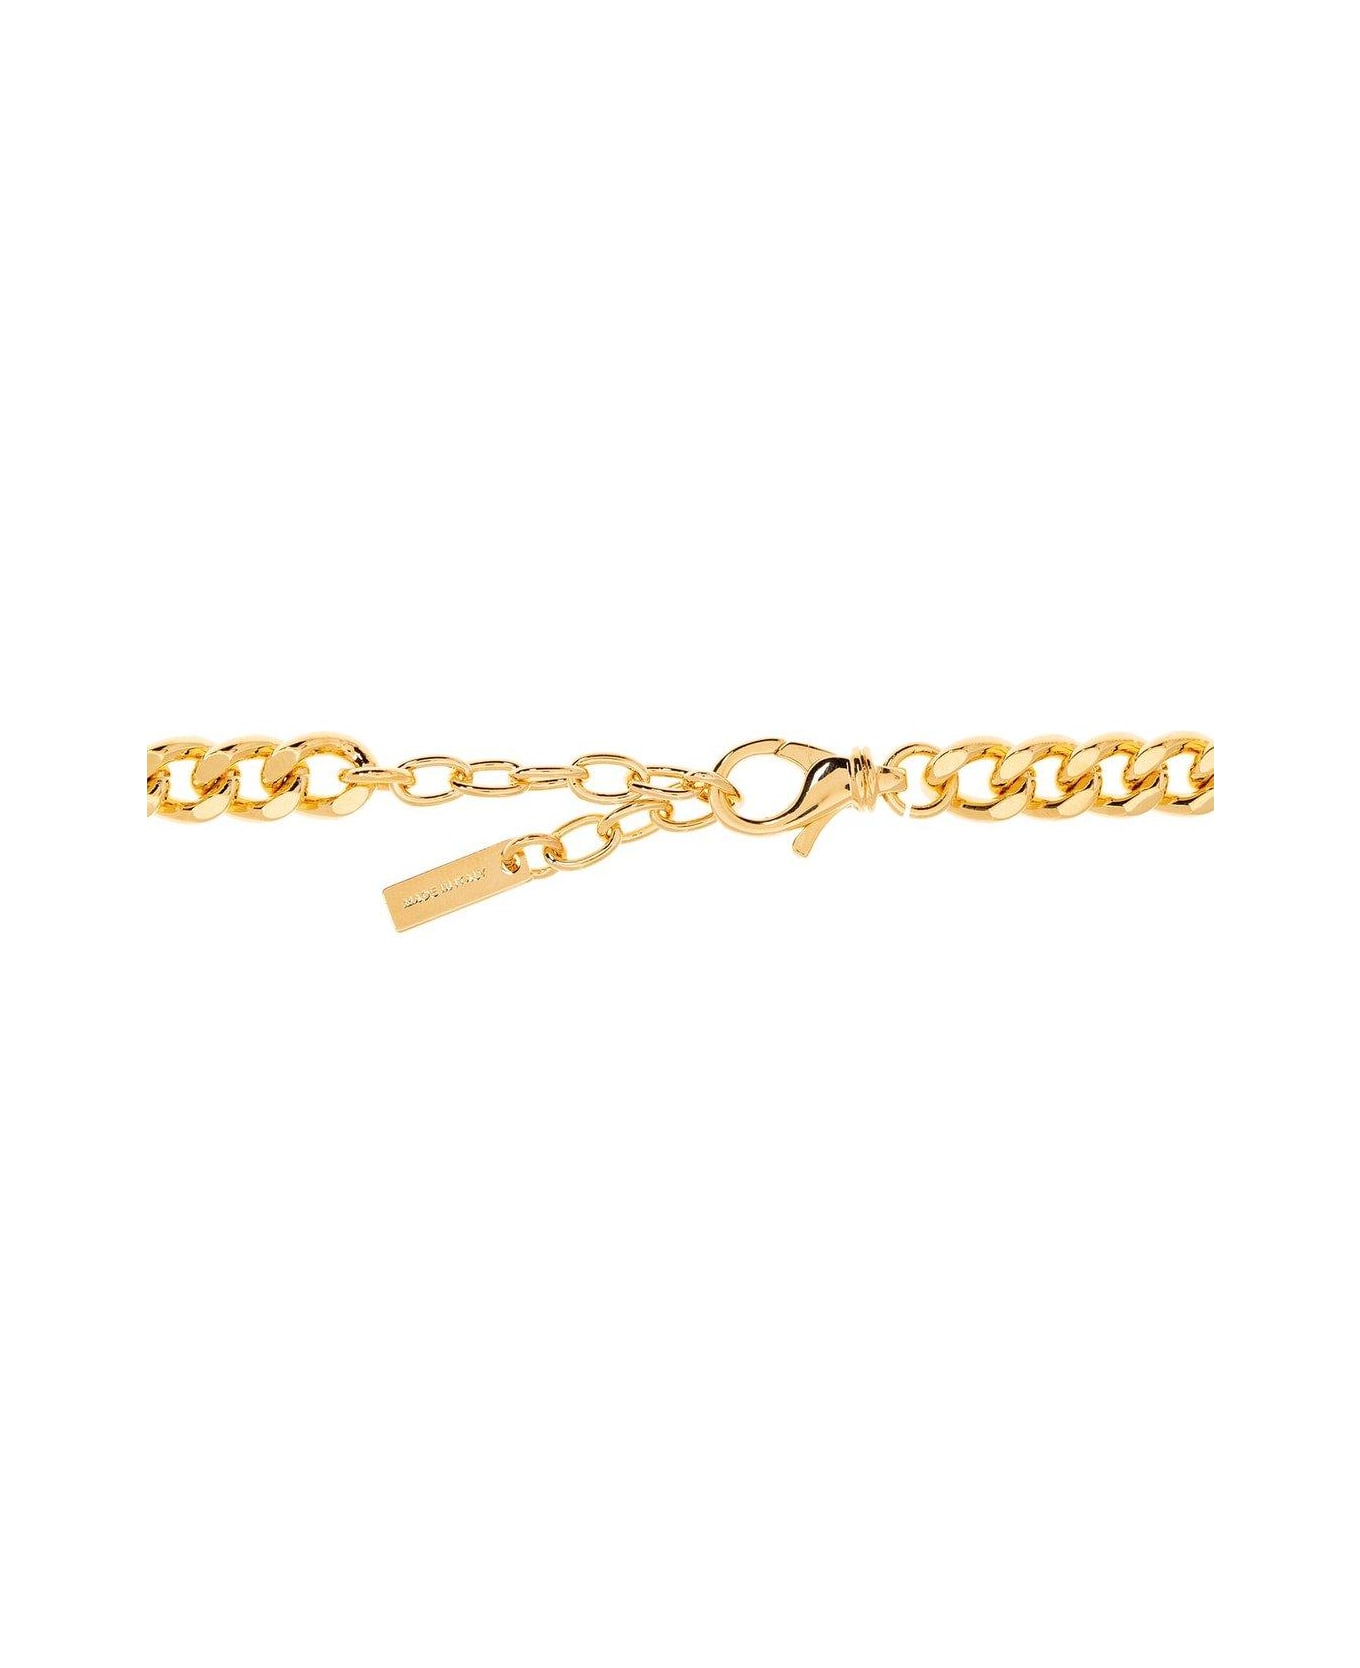 Moschino Teddy Bear Pendant Necklace - GOLD